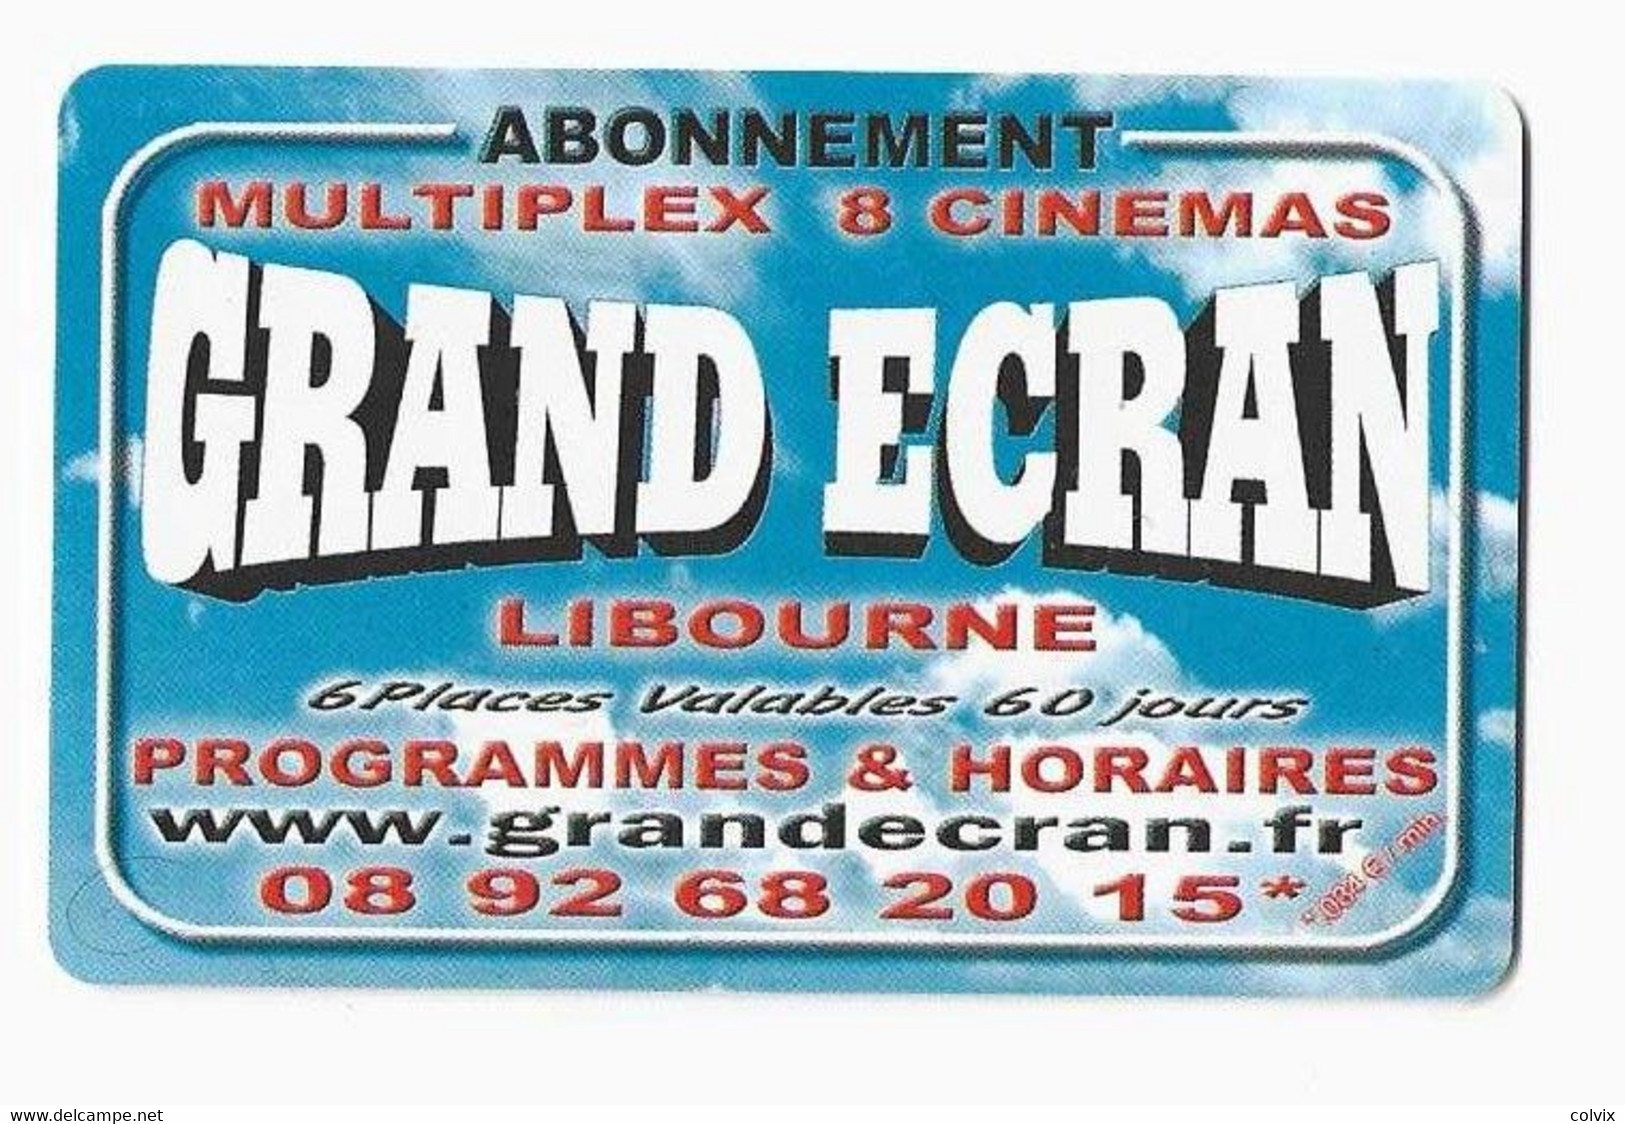 FRANCE CARTE CINEMA GRAND ECRAN LIBOURNE - Kinokarten